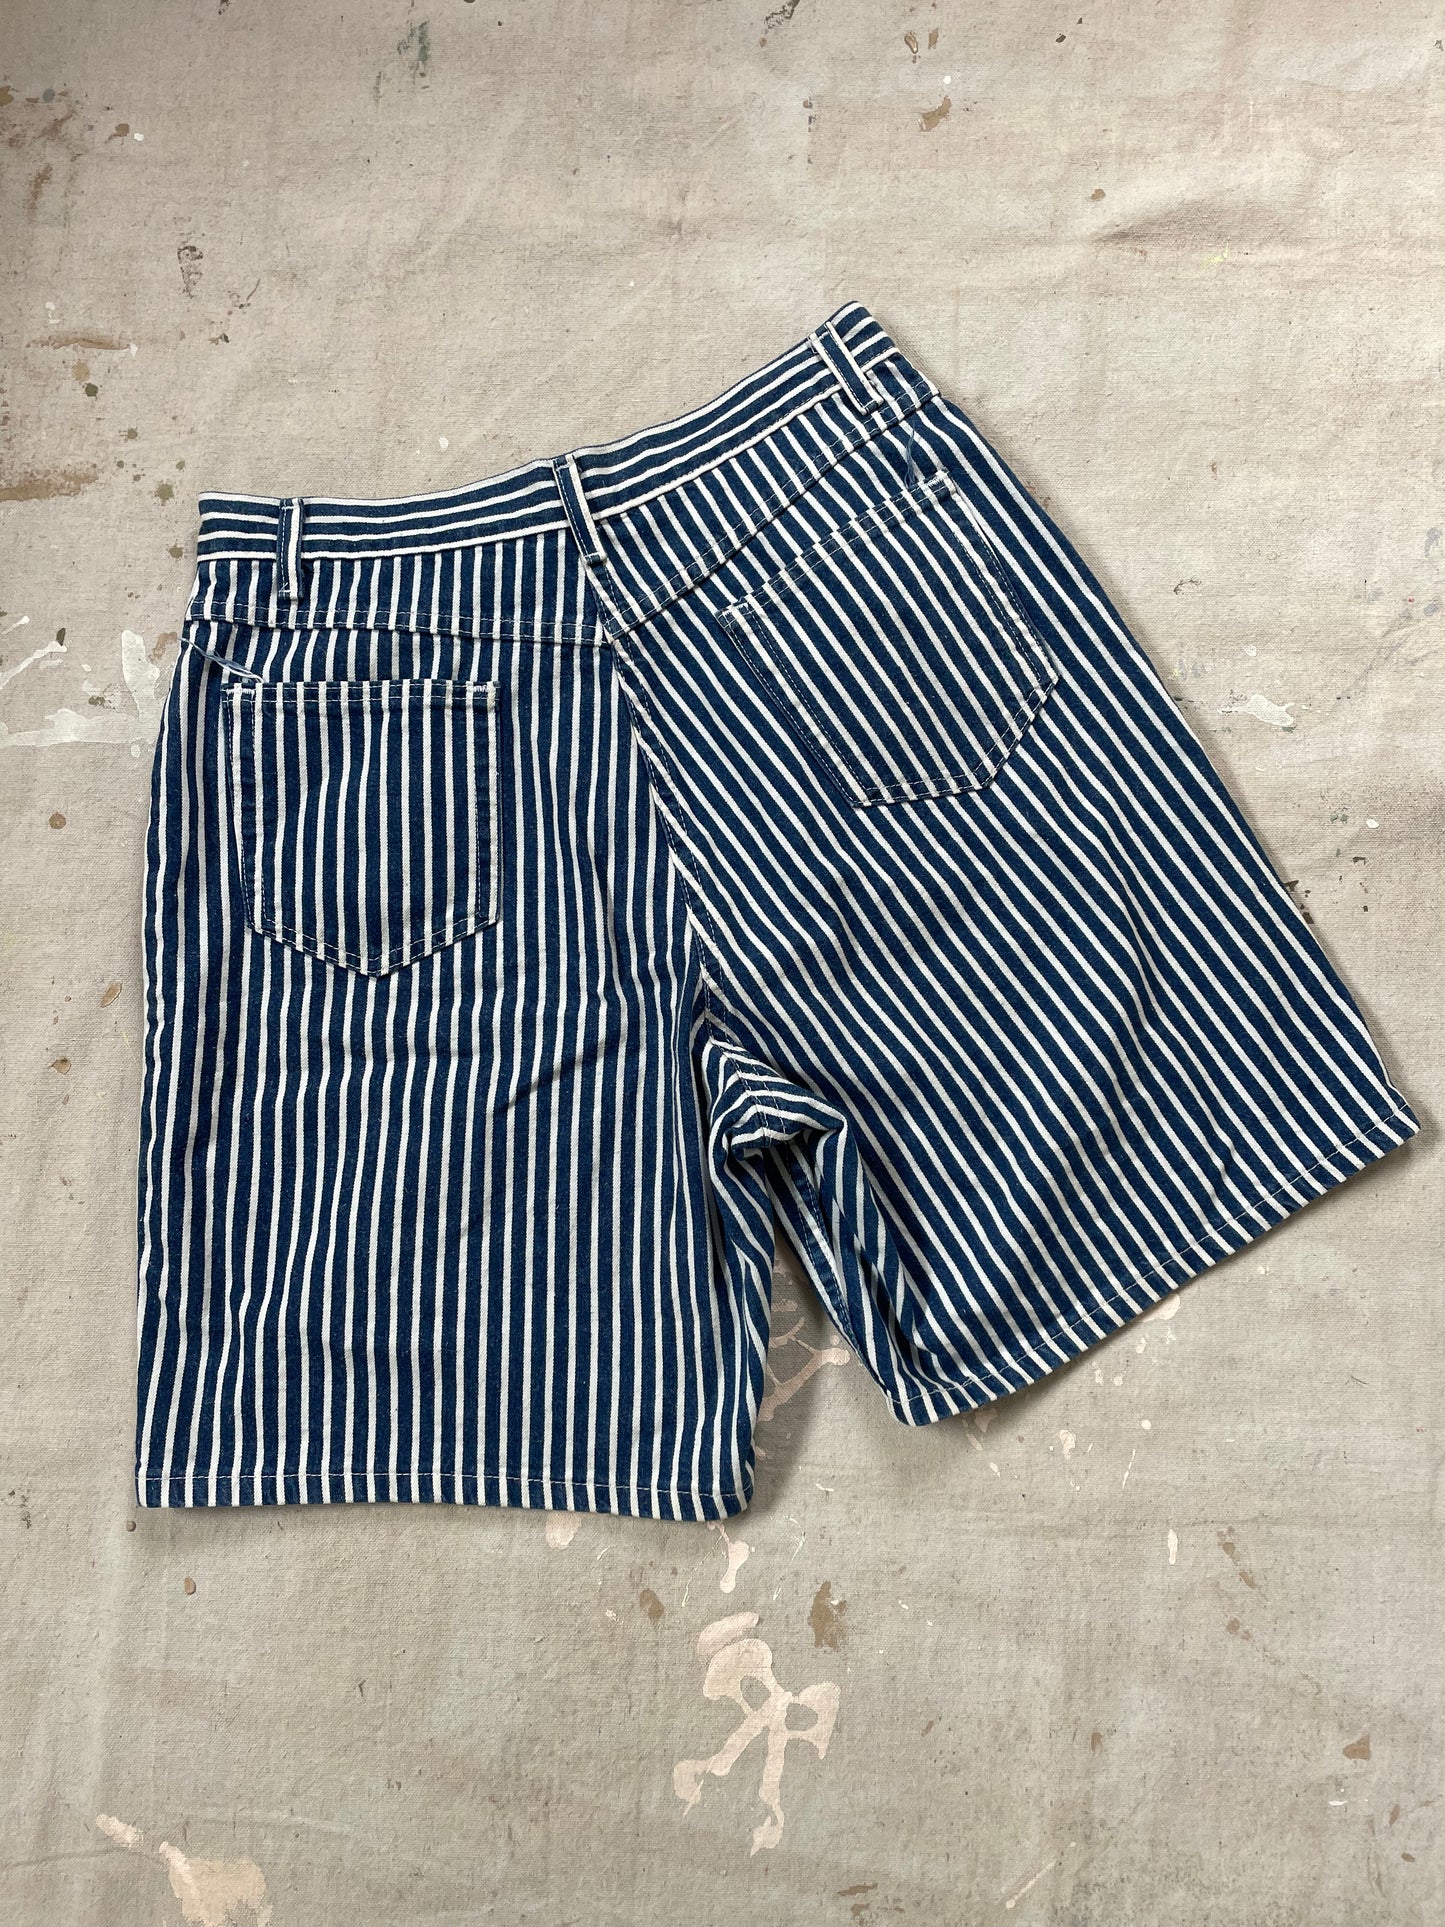 90s Striped Jean Shorts